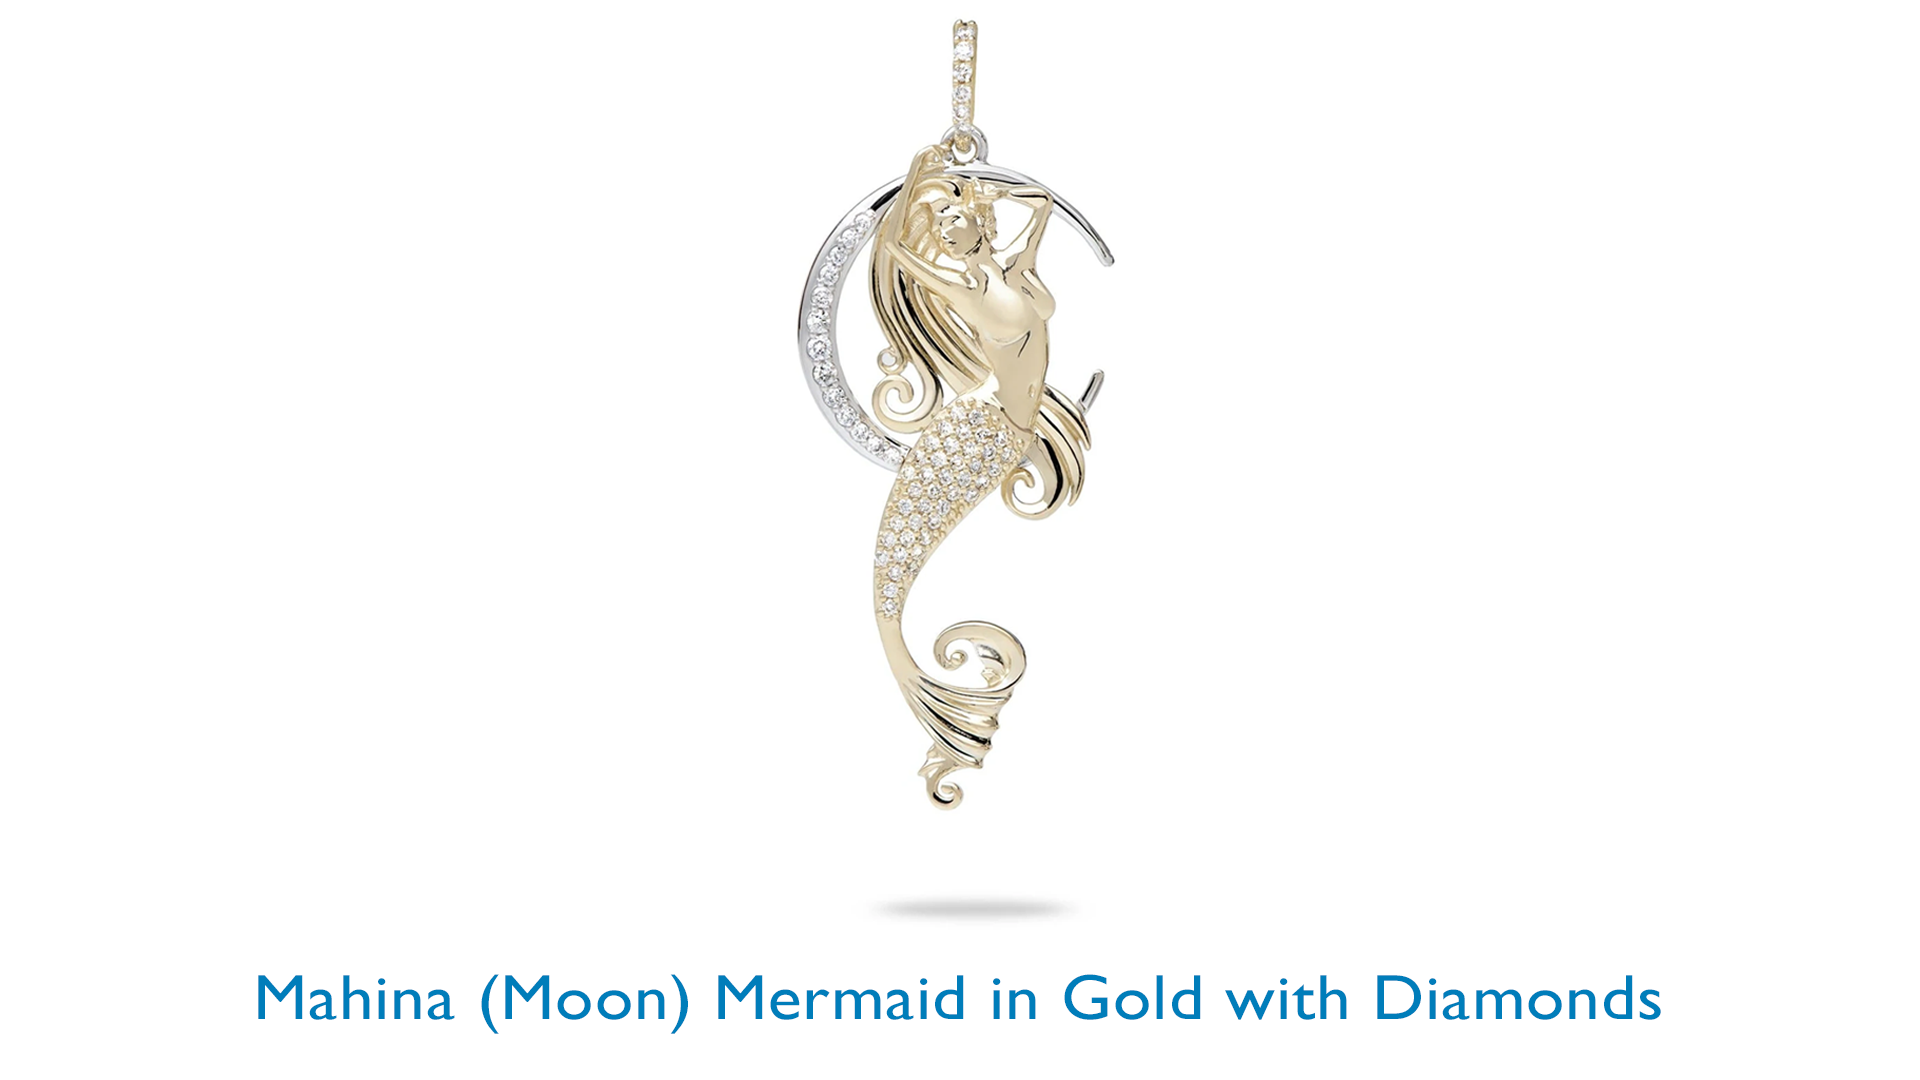 Mahina Moon Mermaid Pendant in Gold with Diamonds